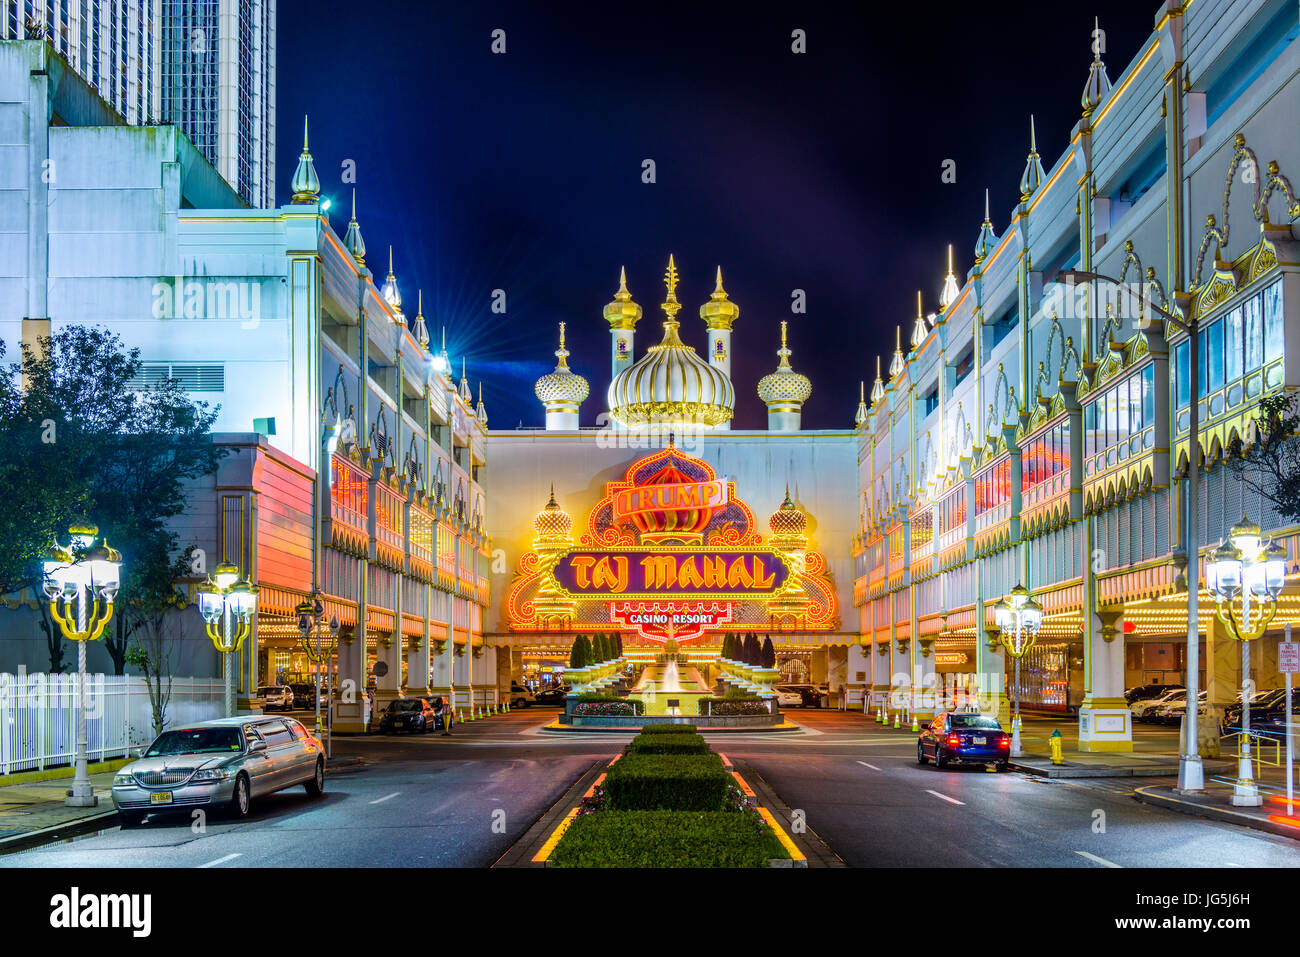 ATLANTIC CITY, NEW JERSEY - 8 septembre 2012 : Le Taj Mahal Casino à Atlantic City. Le casino a fermé ses portes en 2016. Banque D'Images